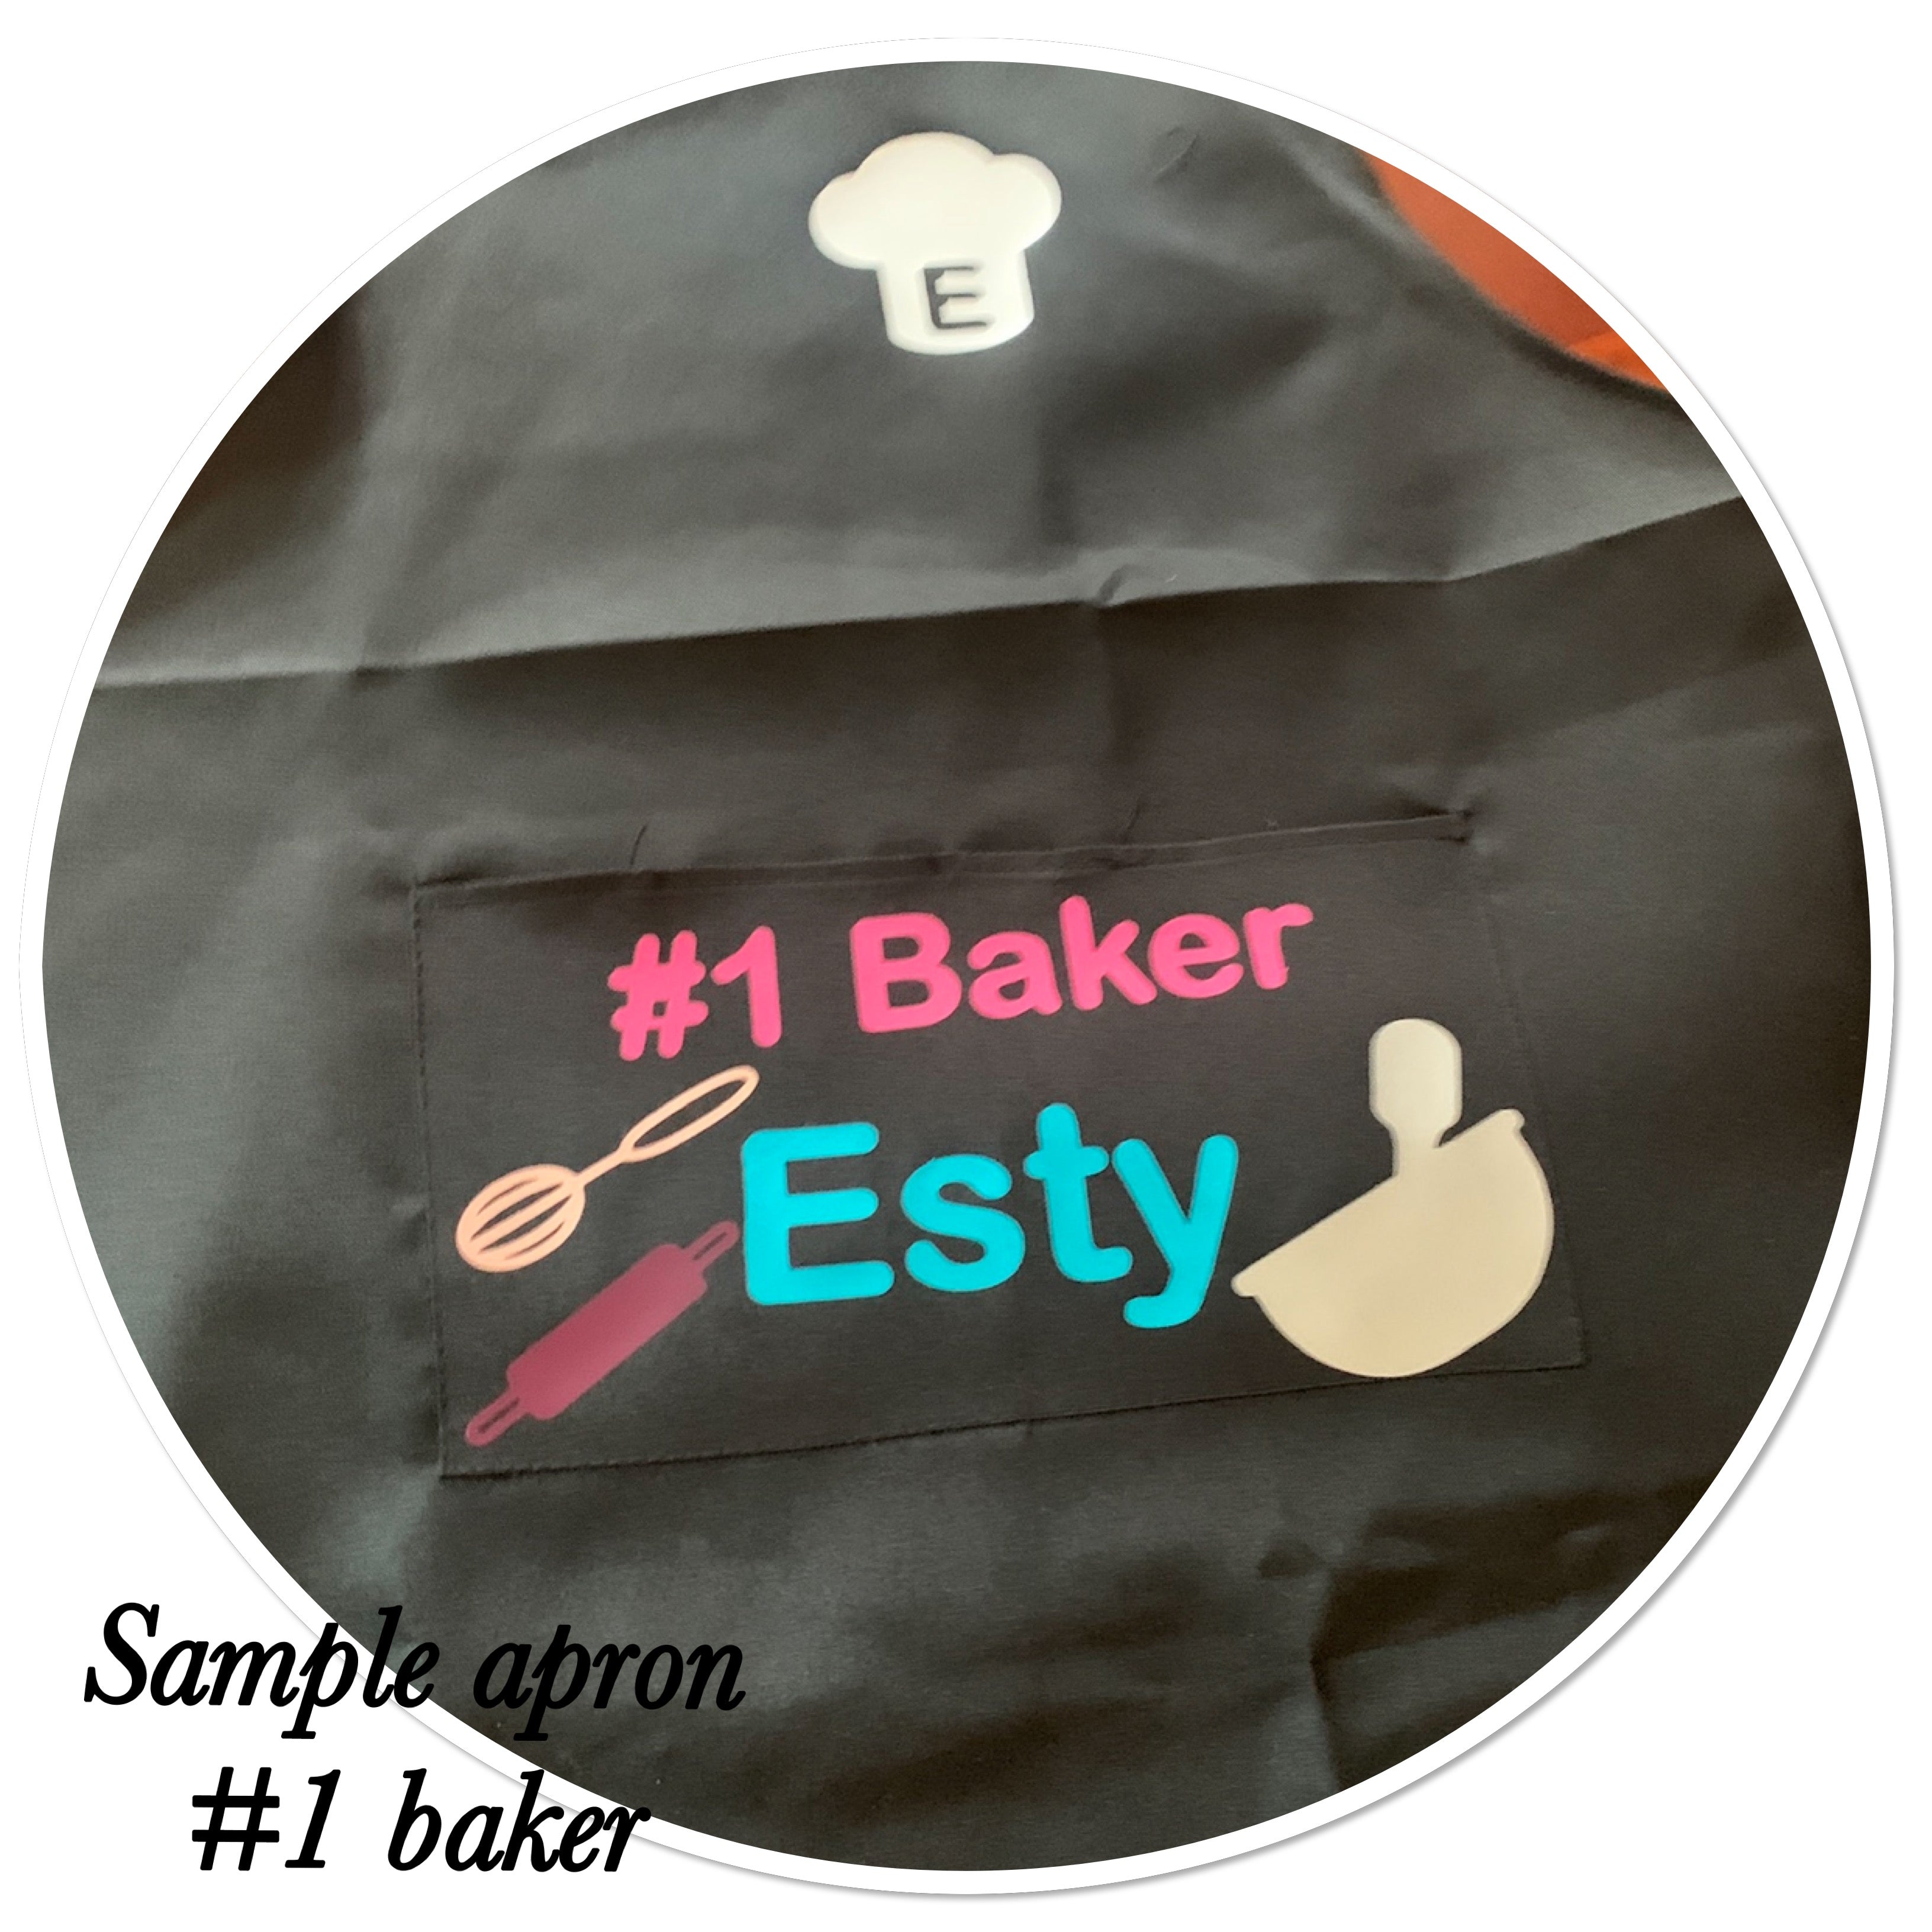 Black custom apron baking school personalized teen/ adult